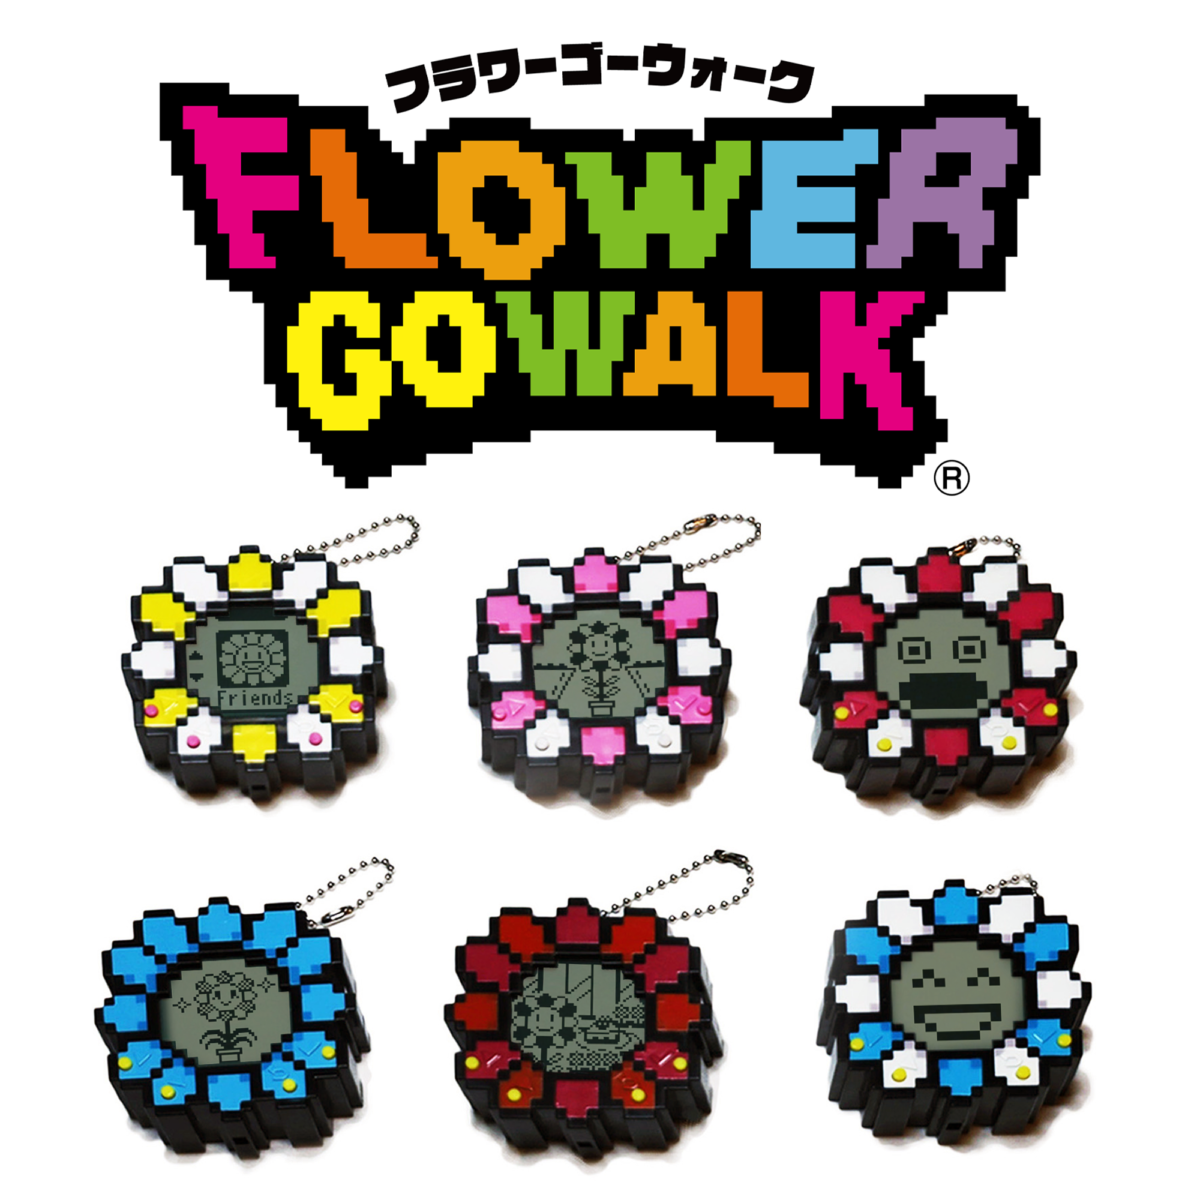 Takashi Murakami, Flower Belt